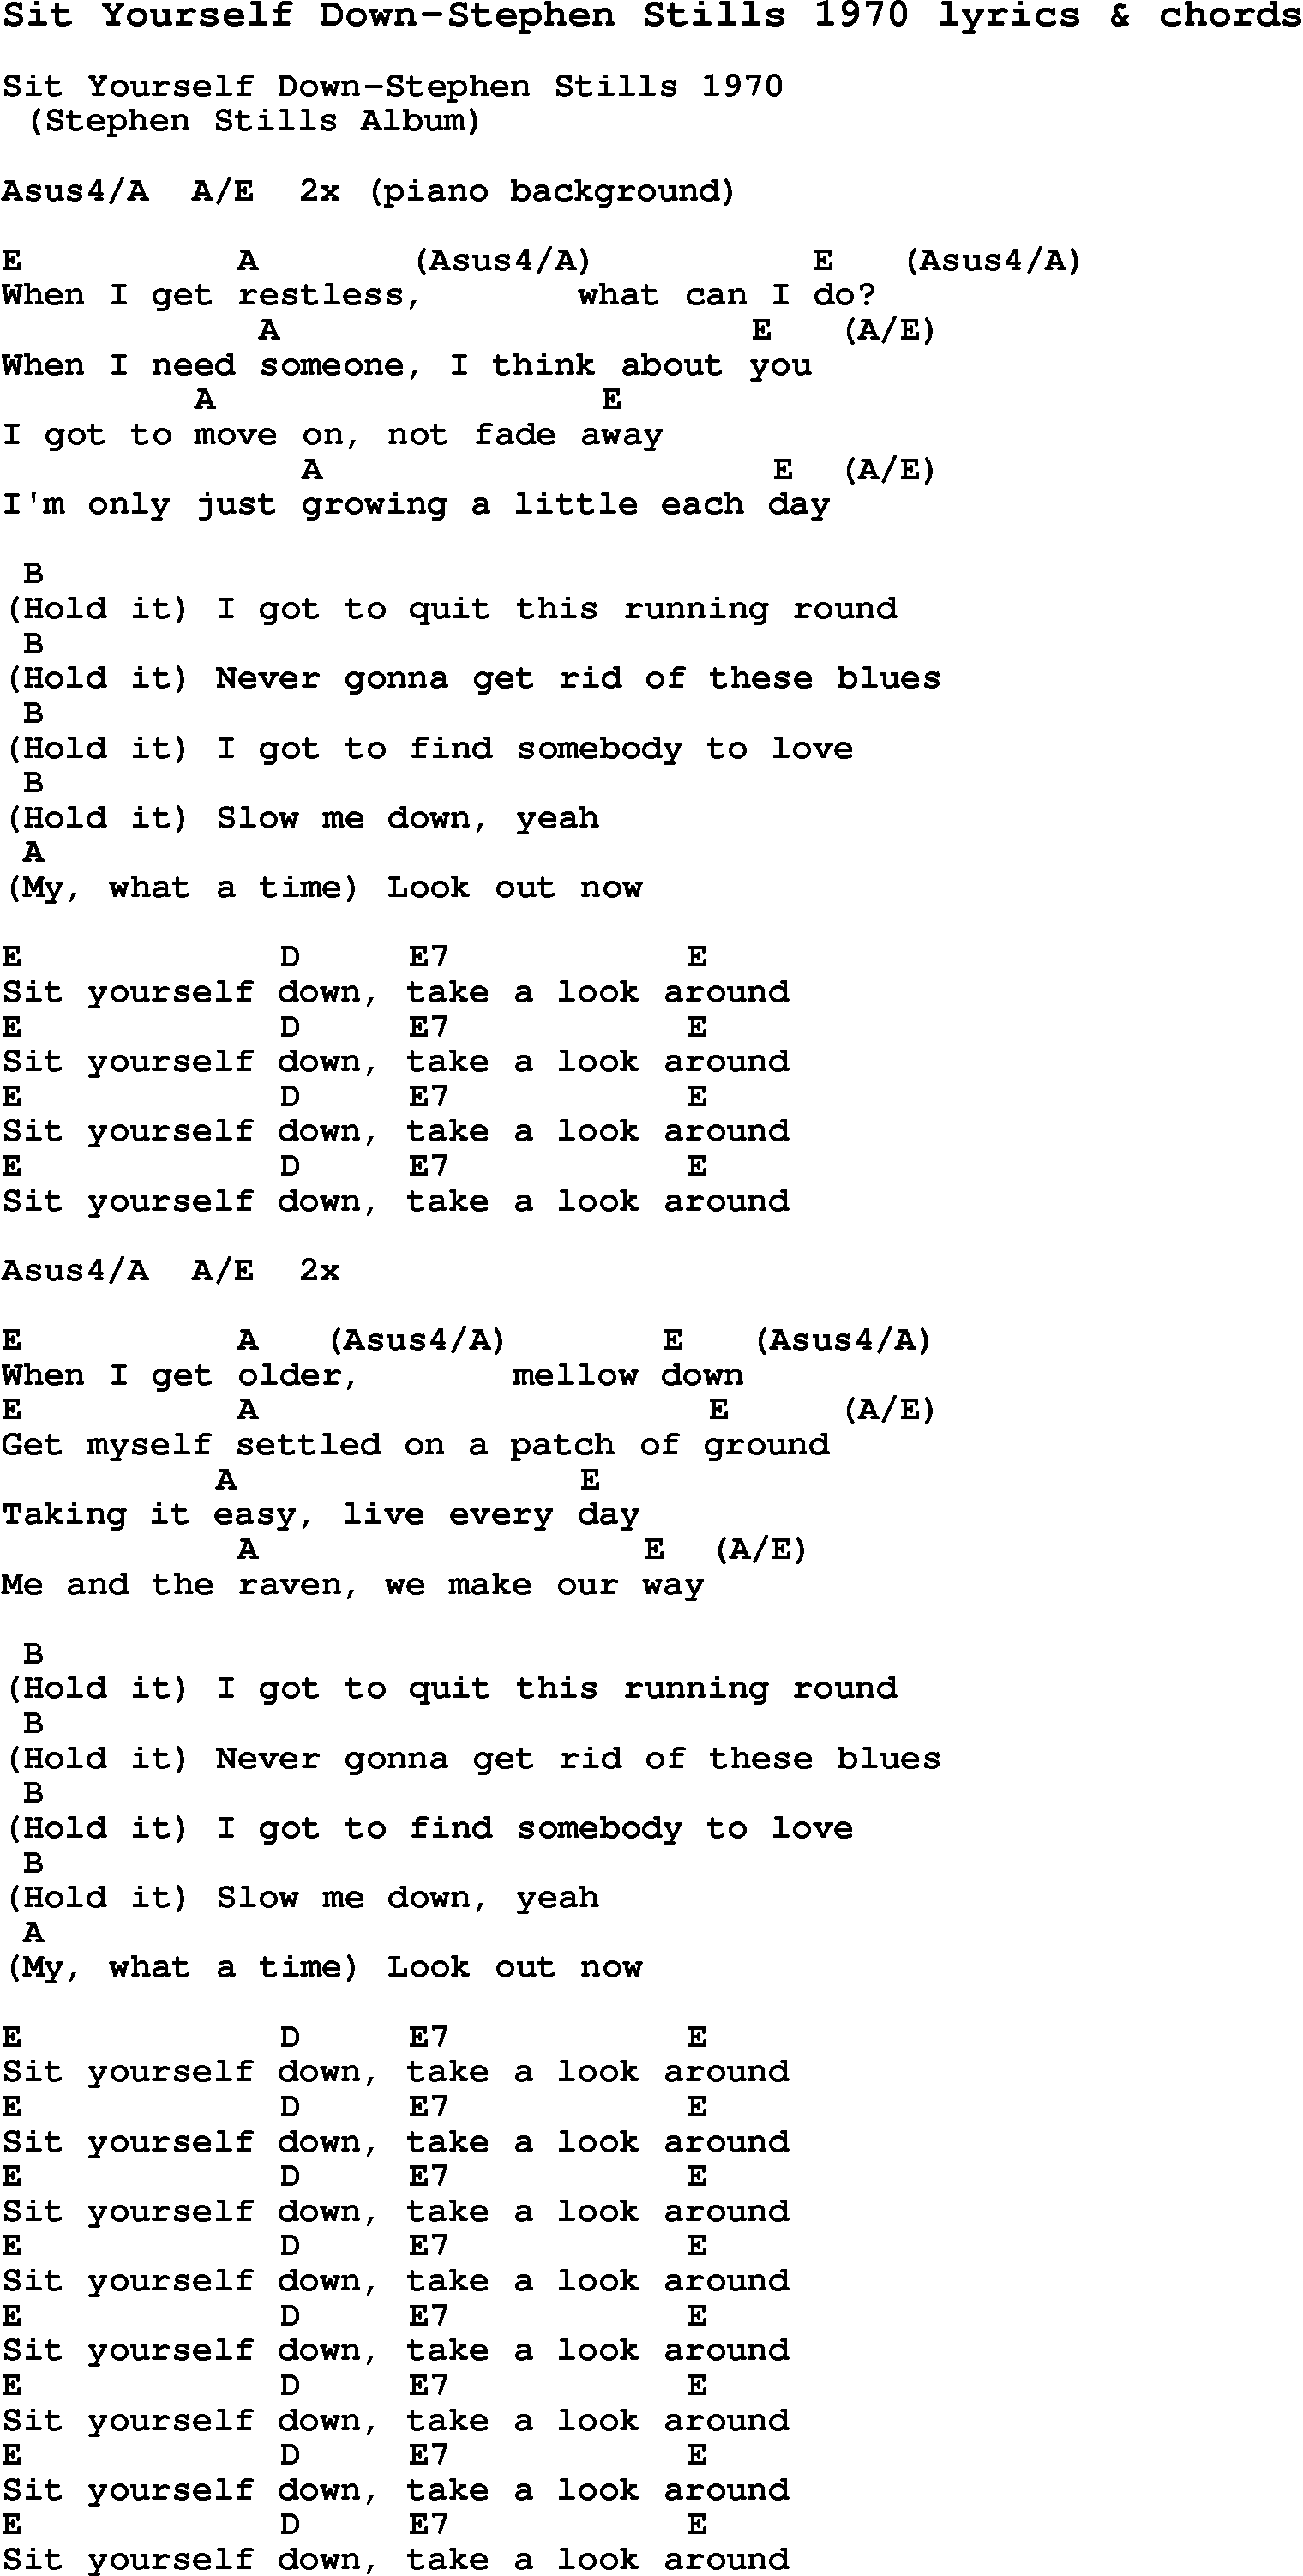 Love Song Lyrics for: Sit Yourself Down-Stephen Stills 1970 with chords for Ukulele, Guitar Banjo etc.